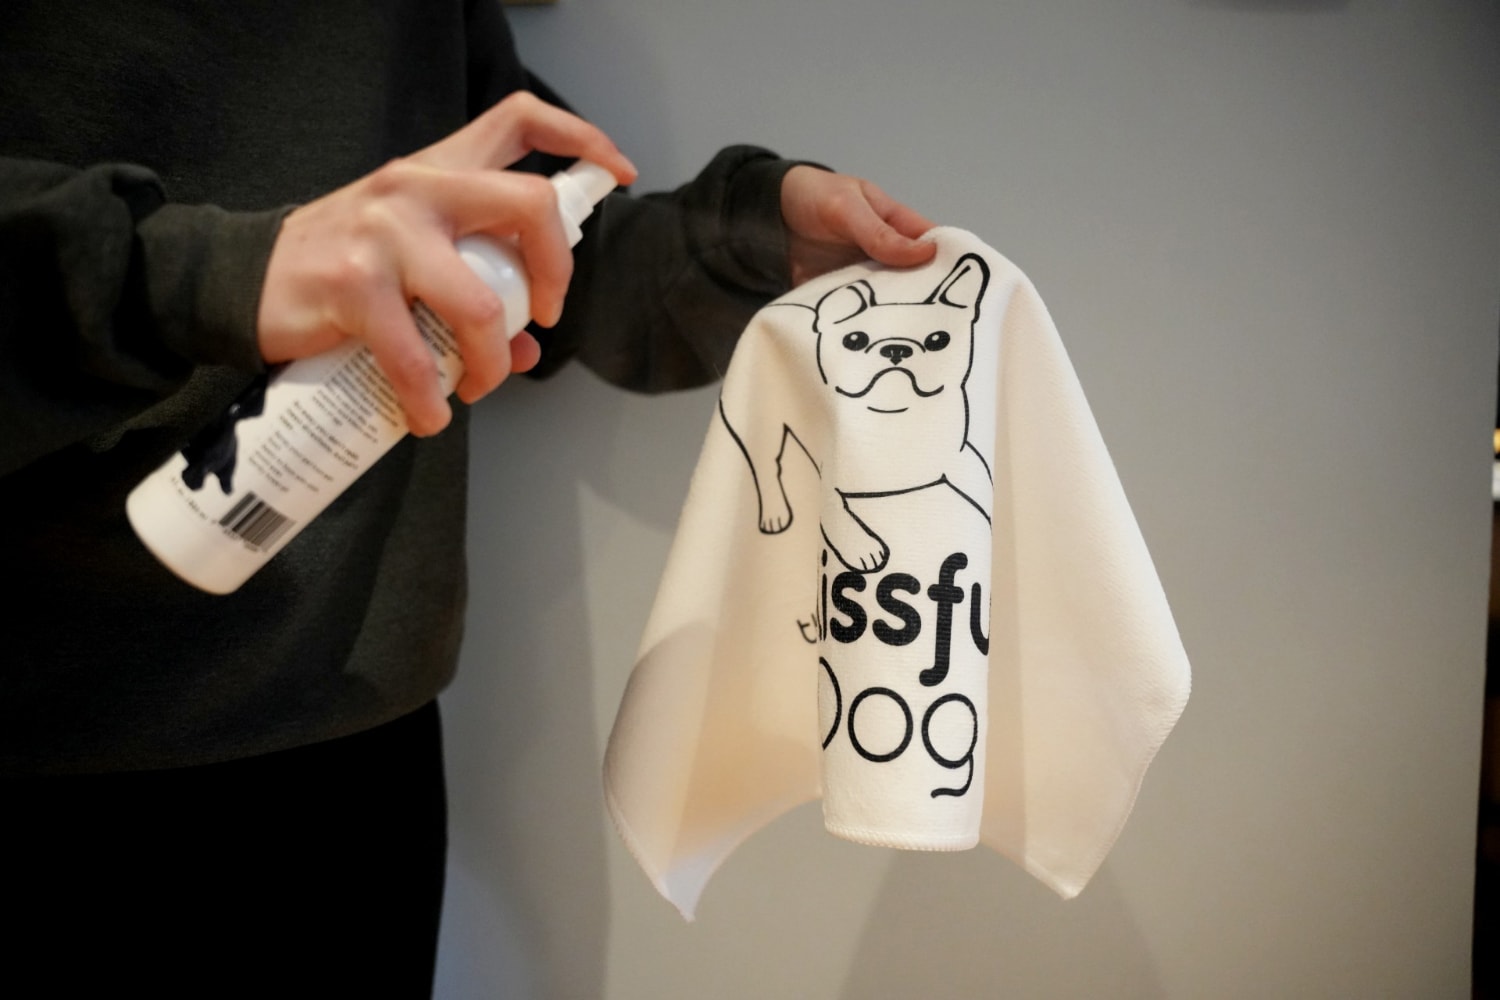 The Blissful Dog No H2O Spray Pet Shampoo - spraying the shampoo on towel